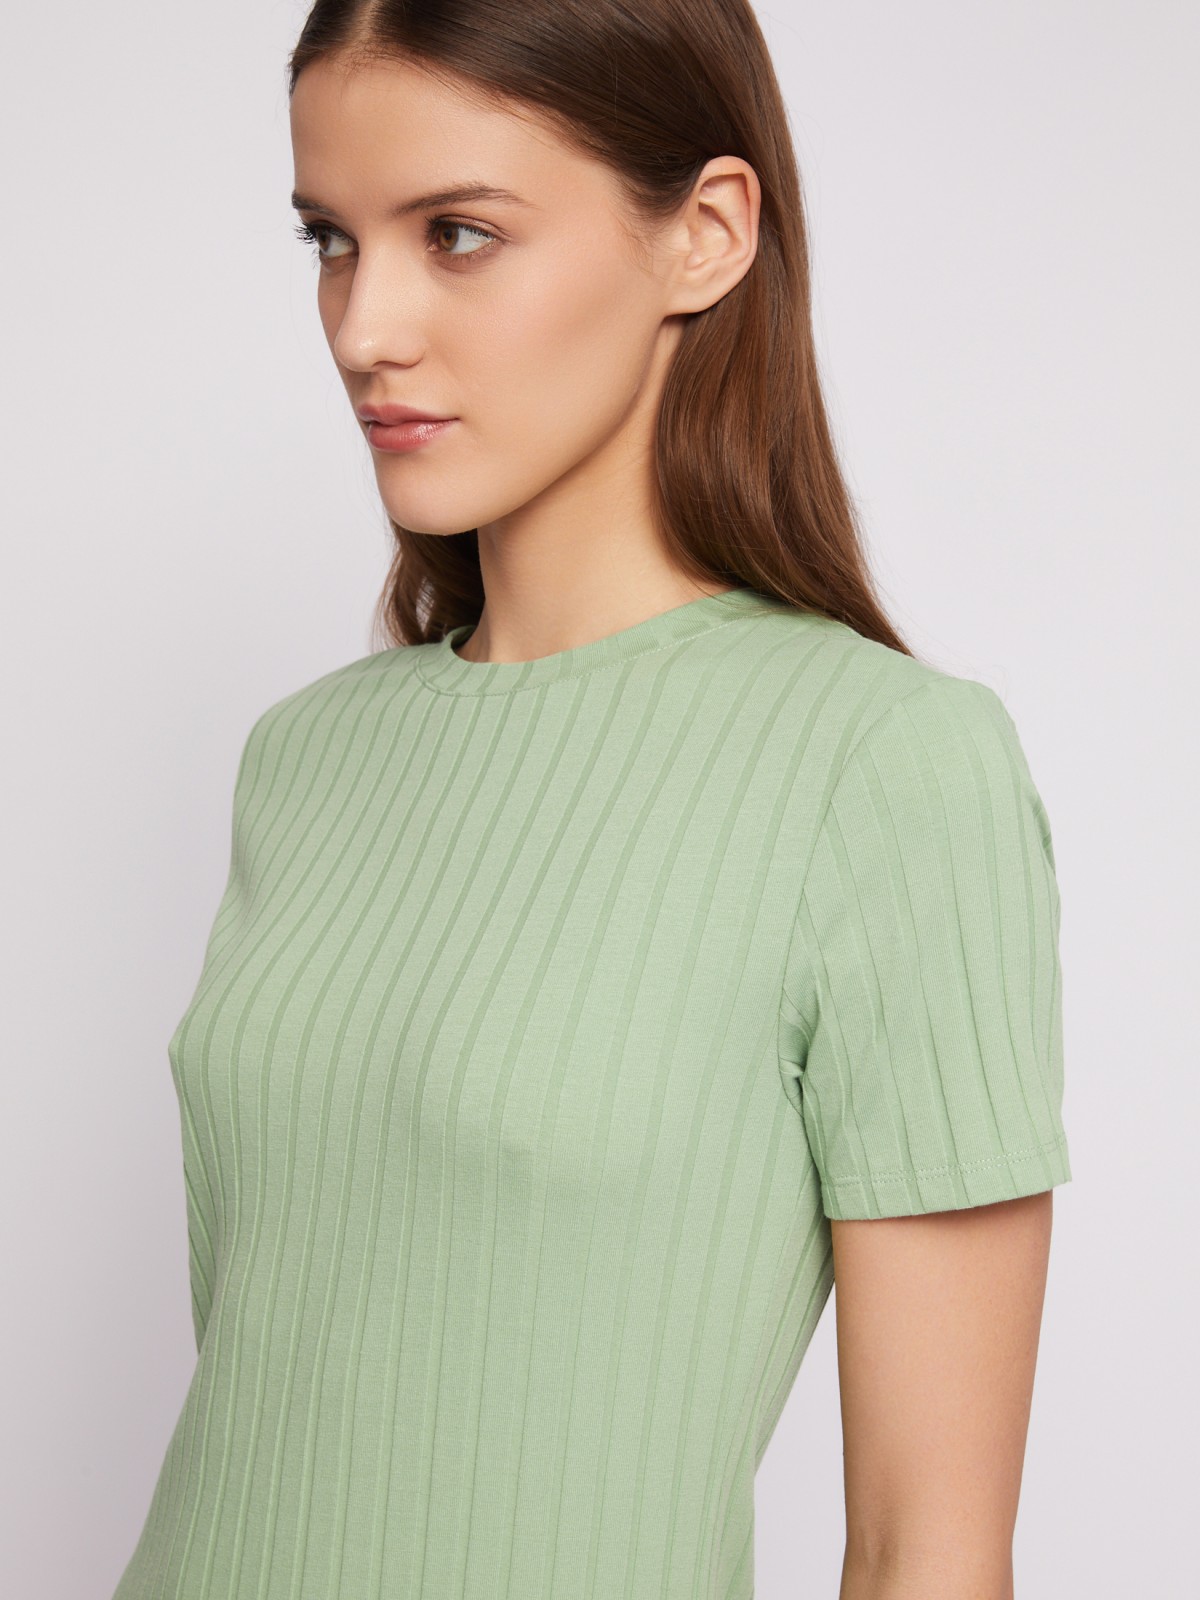 Платье-футболка миди с коротким рукавом zolla N24218139133, цвет светло-зеленый, размер XS - фото 3